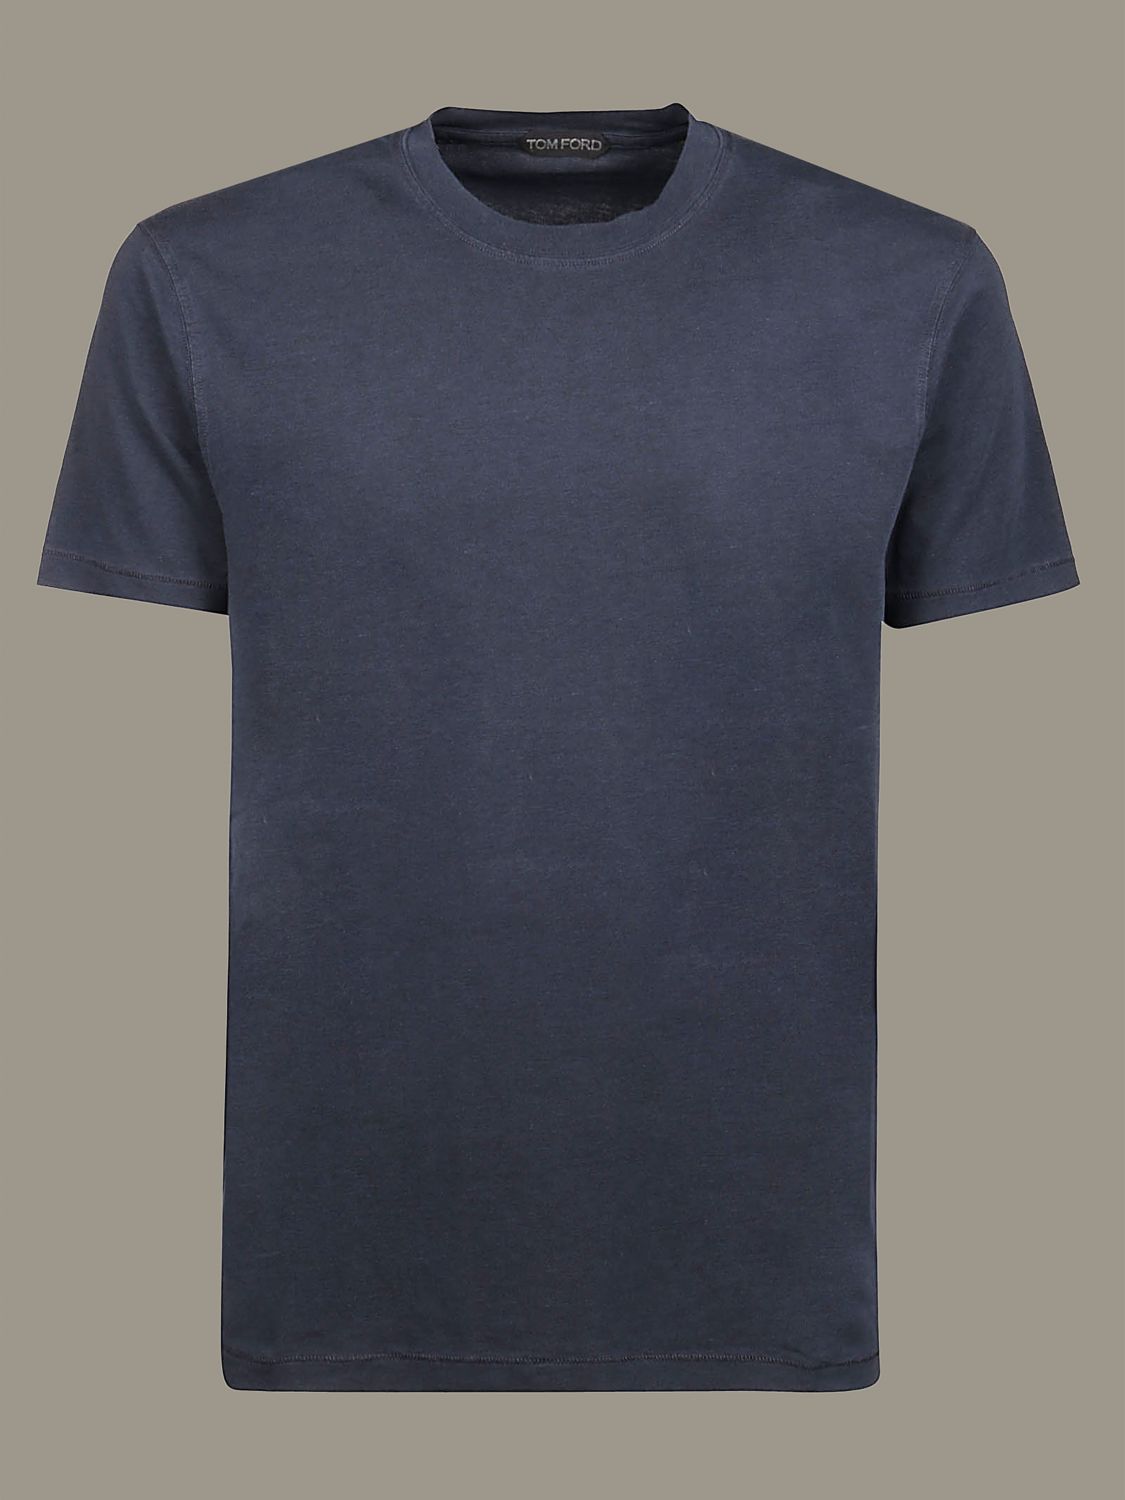 Tom Ford Outlet: t-shirt for man - Blue | Tom Ford t-shirt TFJ950BU229  online on 